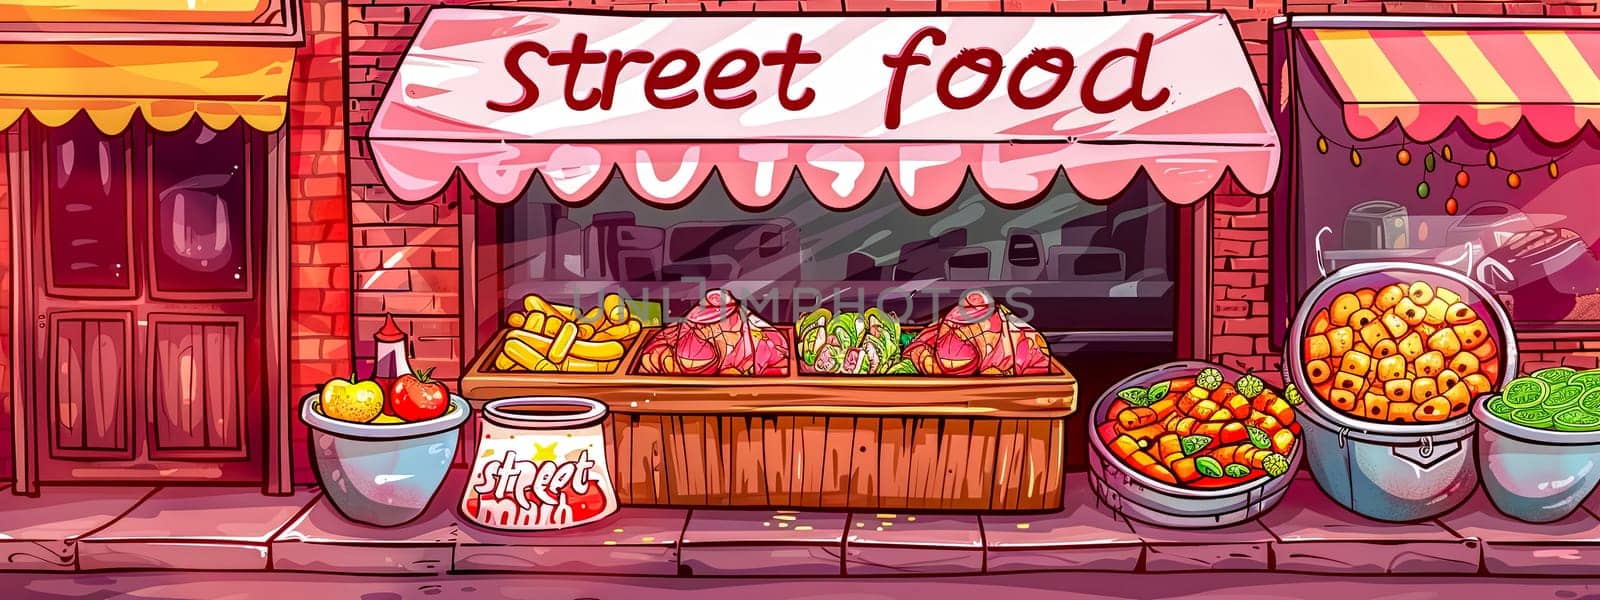 Colorful cartoon street food vendor illustration by Edophoto